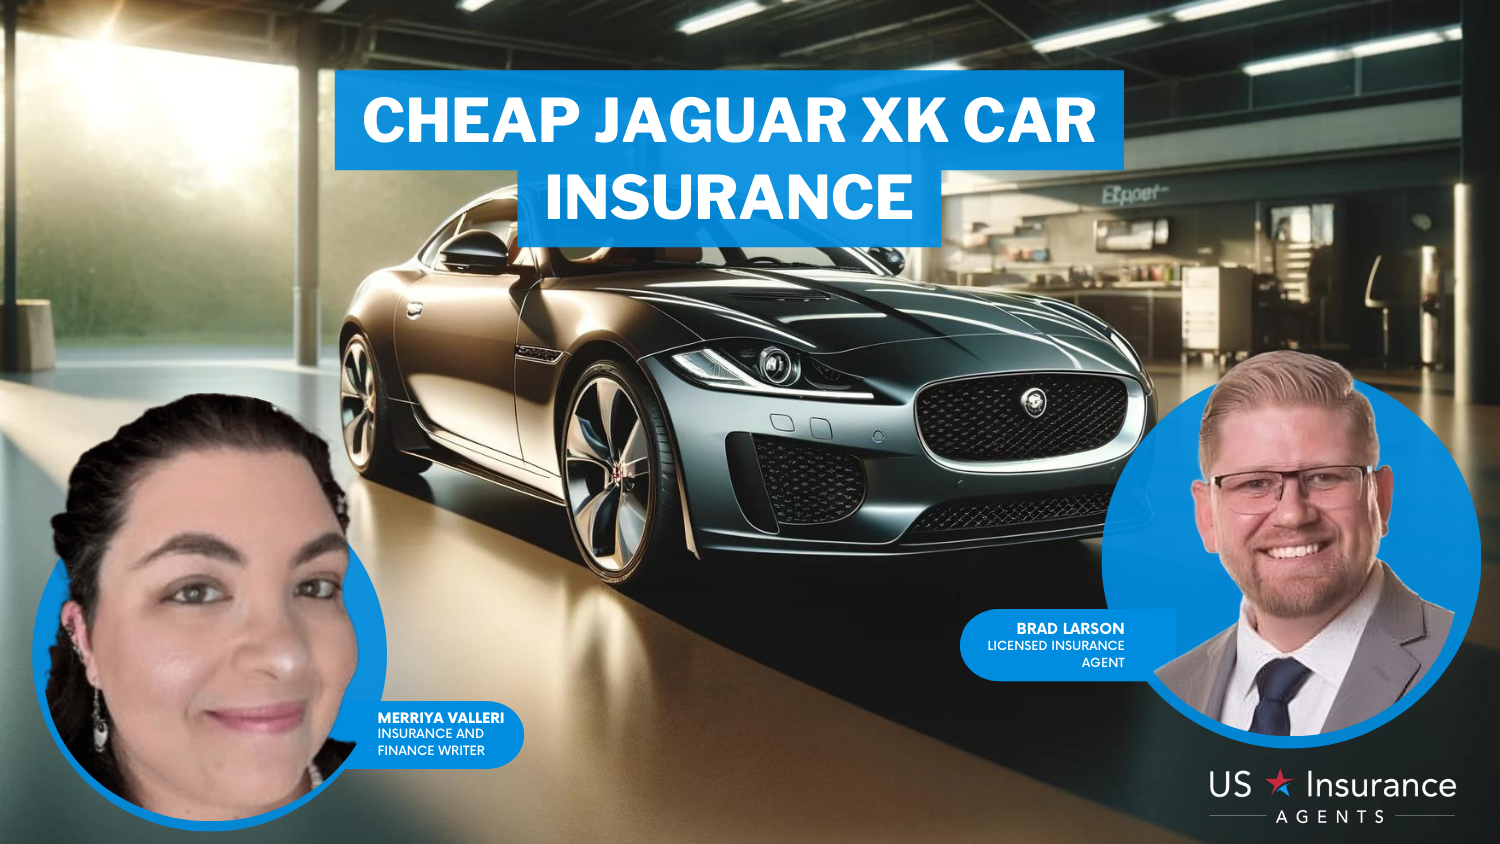 State Farm, AAA, and Geico: cheap Jaguar XK car insurance